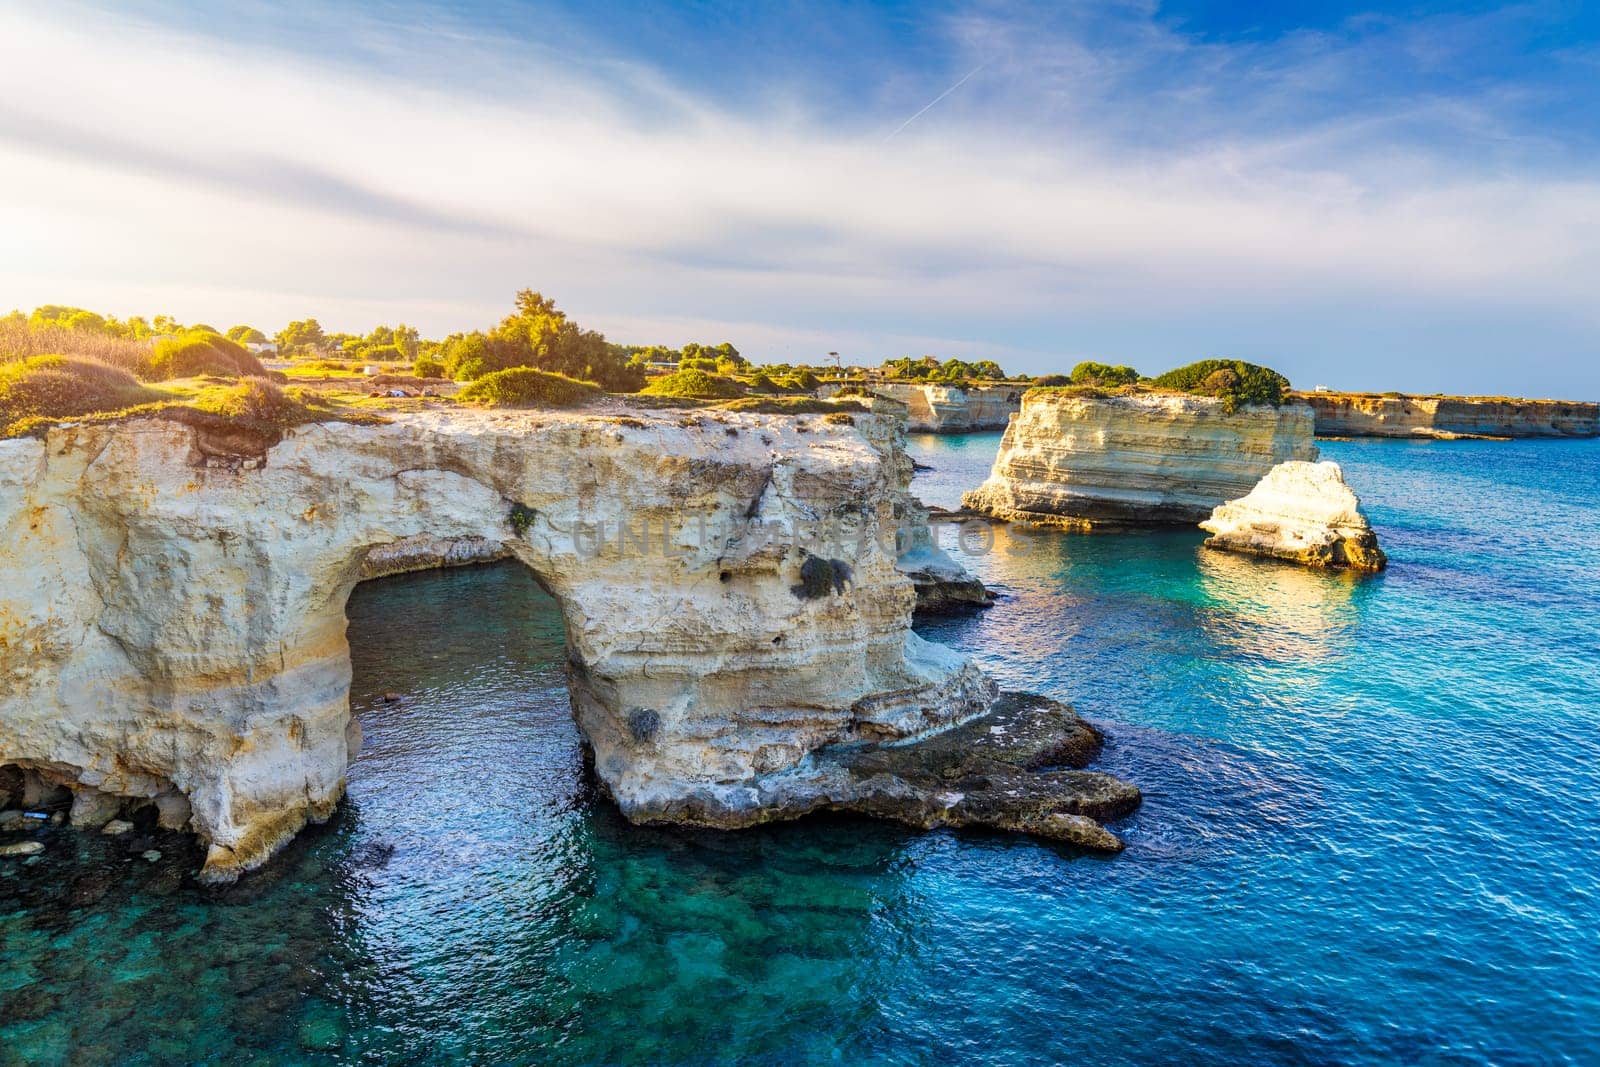 Stunning seascape with cliffs rocky arch and stacks (Faraglioni) at Torre Sant Andrea, Salento coast, Puglia region, Italy. Beautiful cliffs and sea stacks of Sant'Andrea, Salento, Apulia, Italy by DaLiu